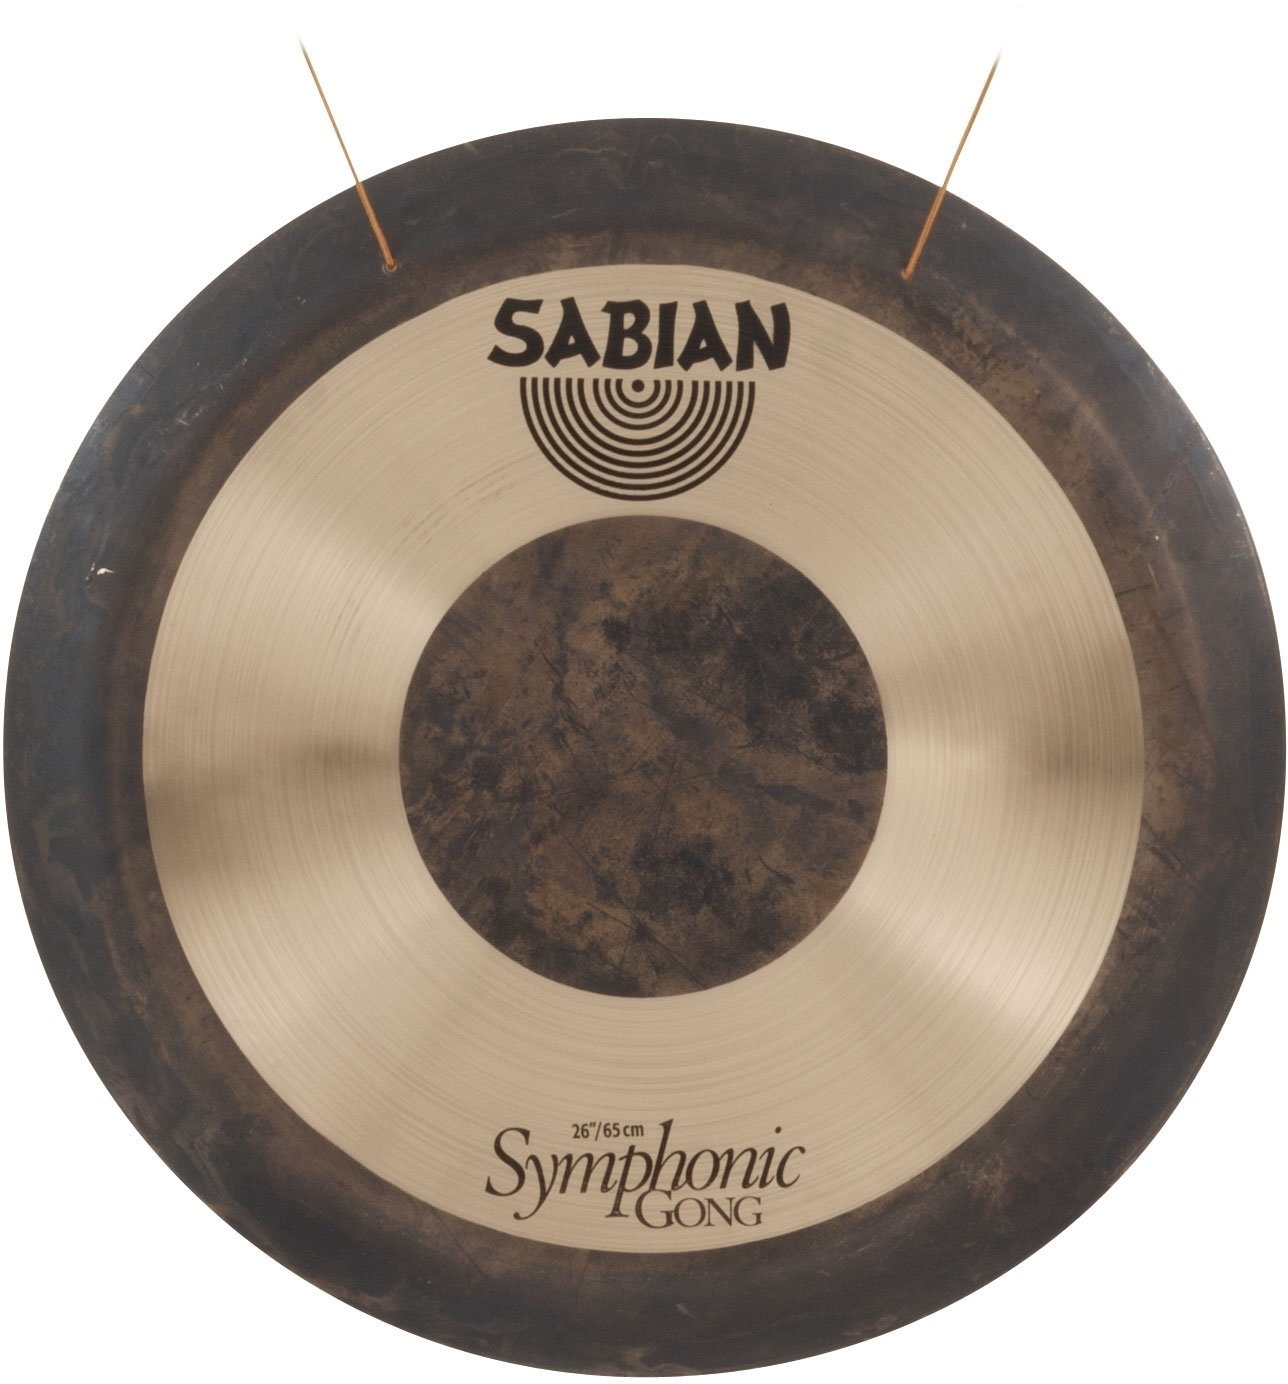 Gong Sabian 52602 Symphonic Medium-Heavy Gong 26"